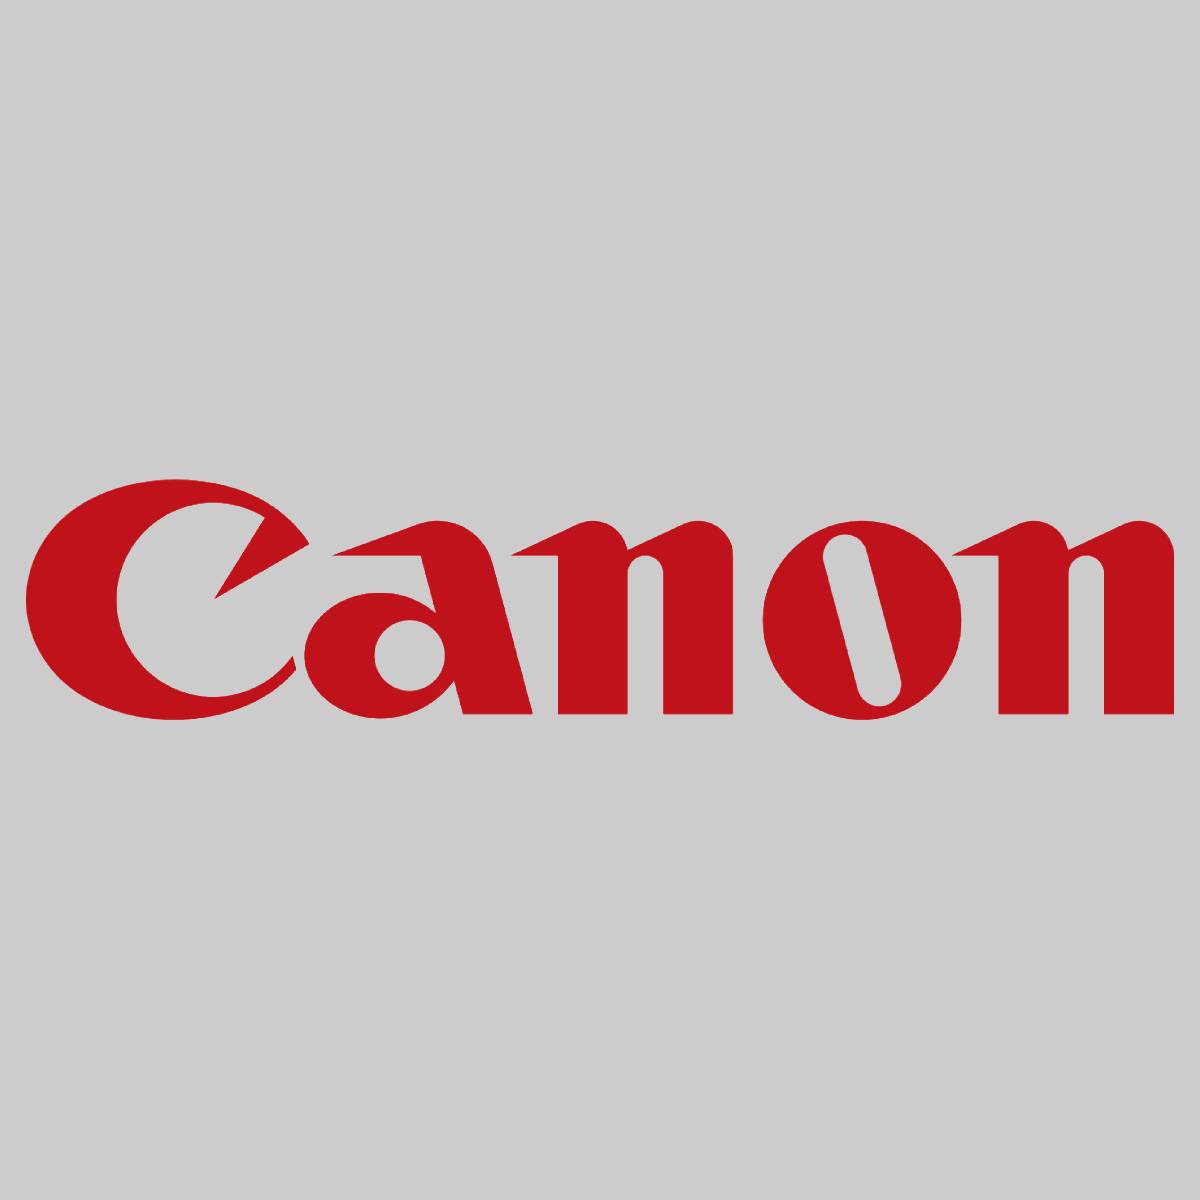 "Original Canon C-EXV 24 Toner Cyan 2448B002 Canon imageRUNNER 5800 c NEU OVP